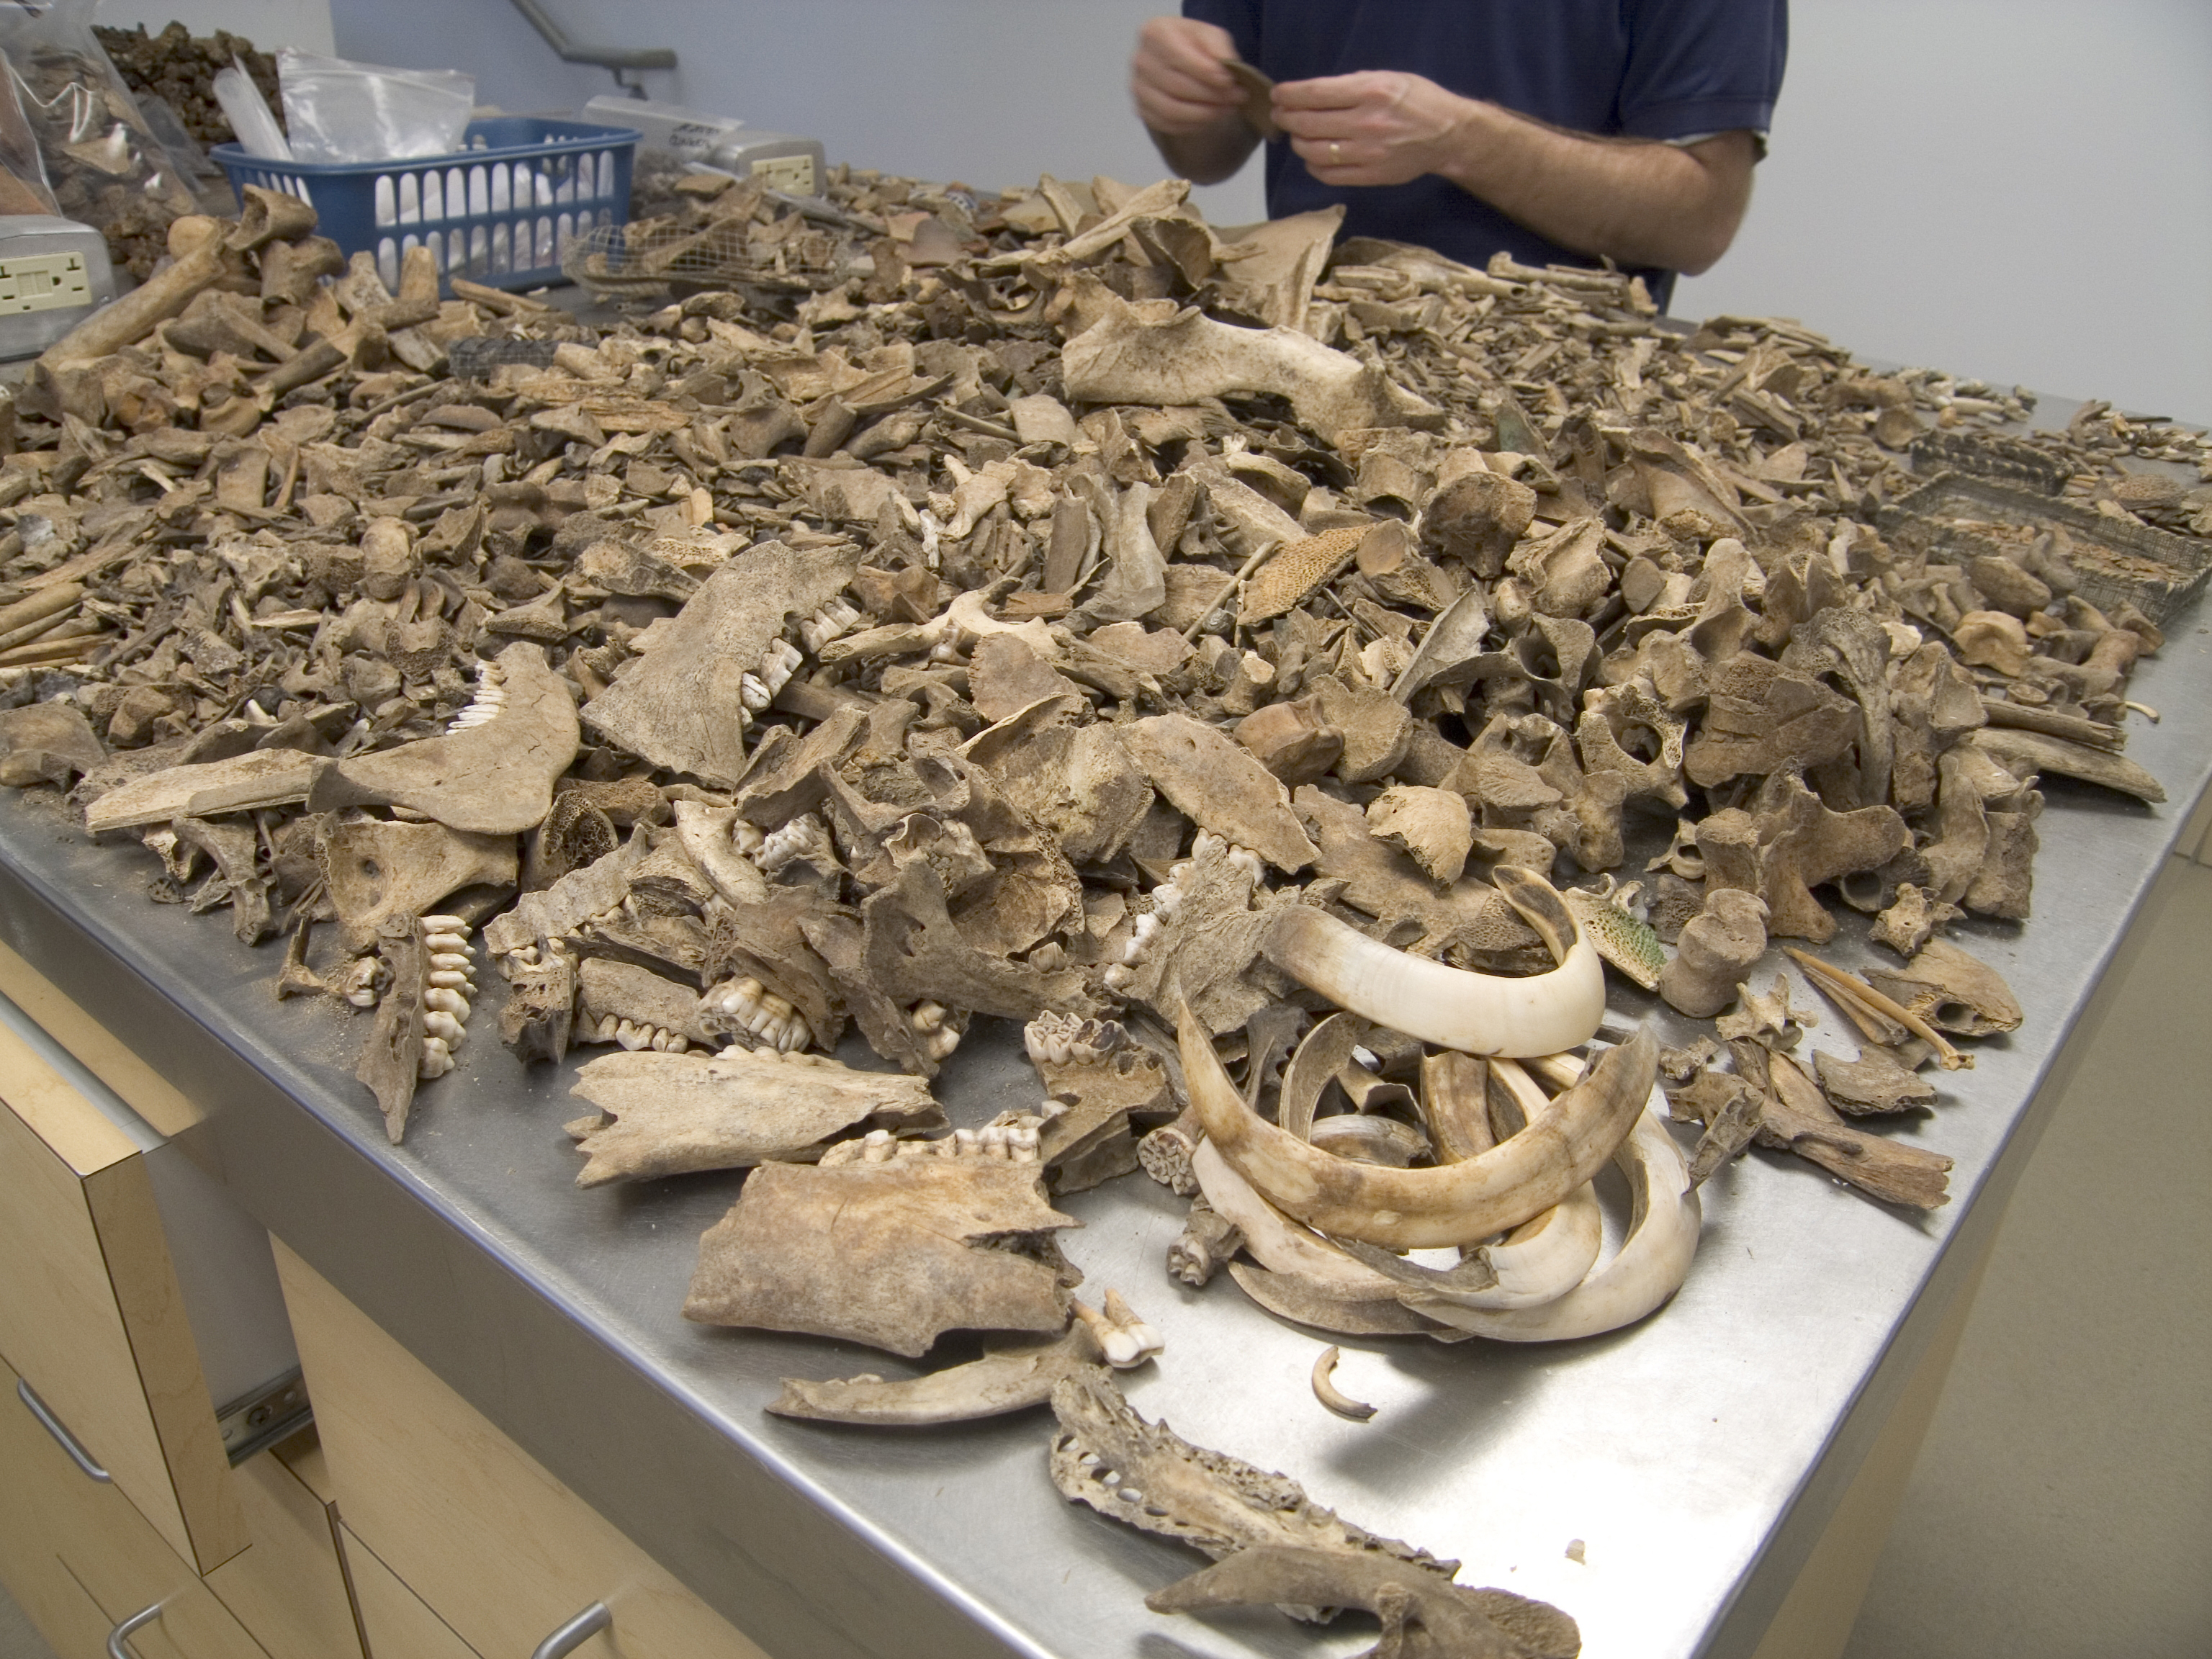 Assortment of animal bones on a table